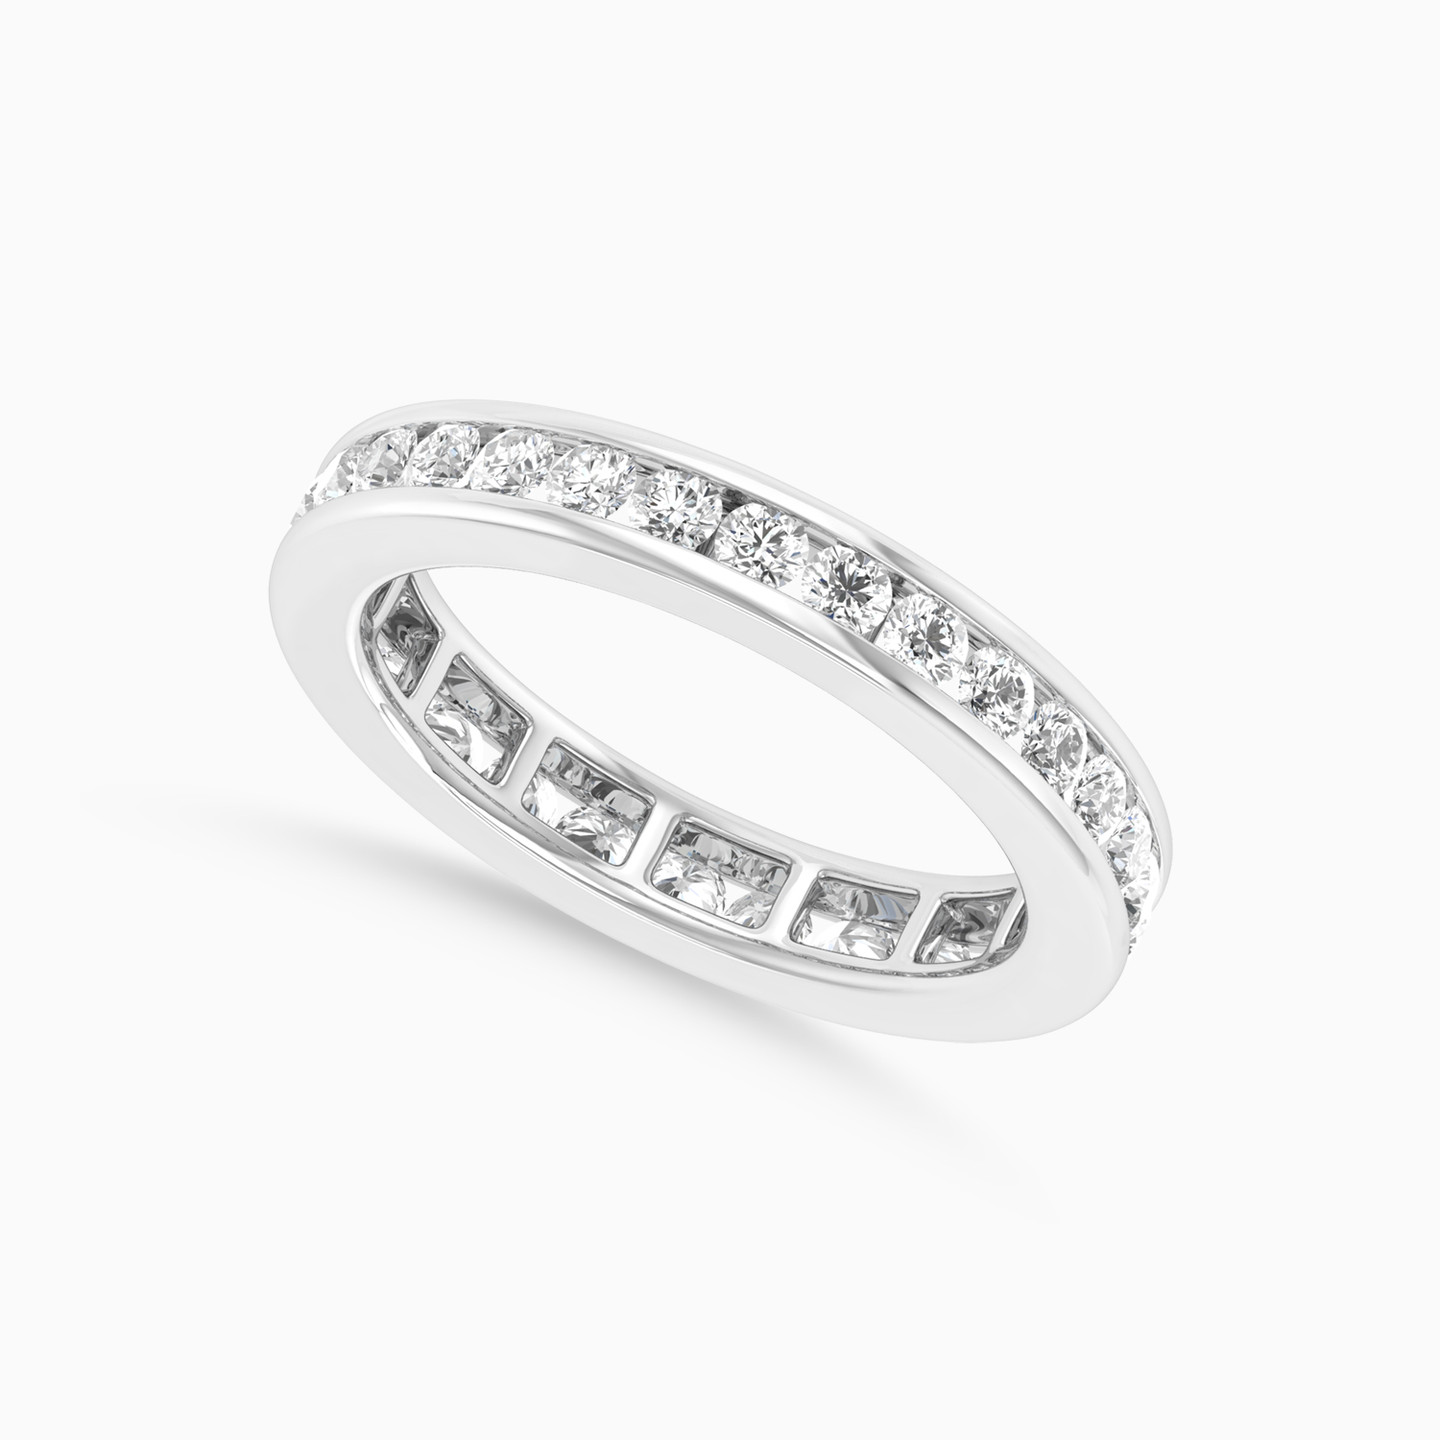  Diamond Eternity Ring in 18K Gold - 2